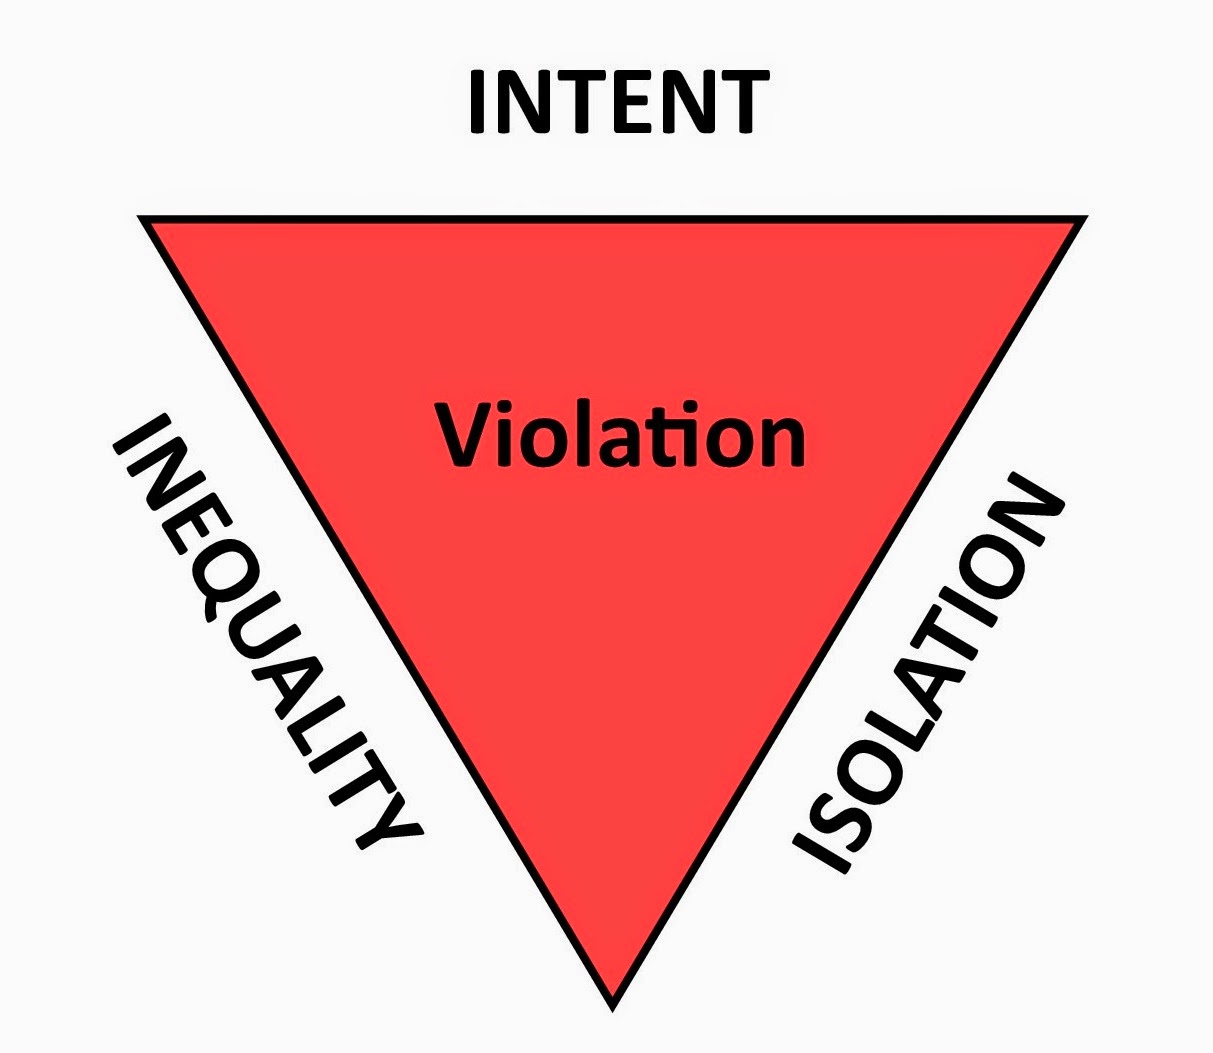 The Violation Triangle